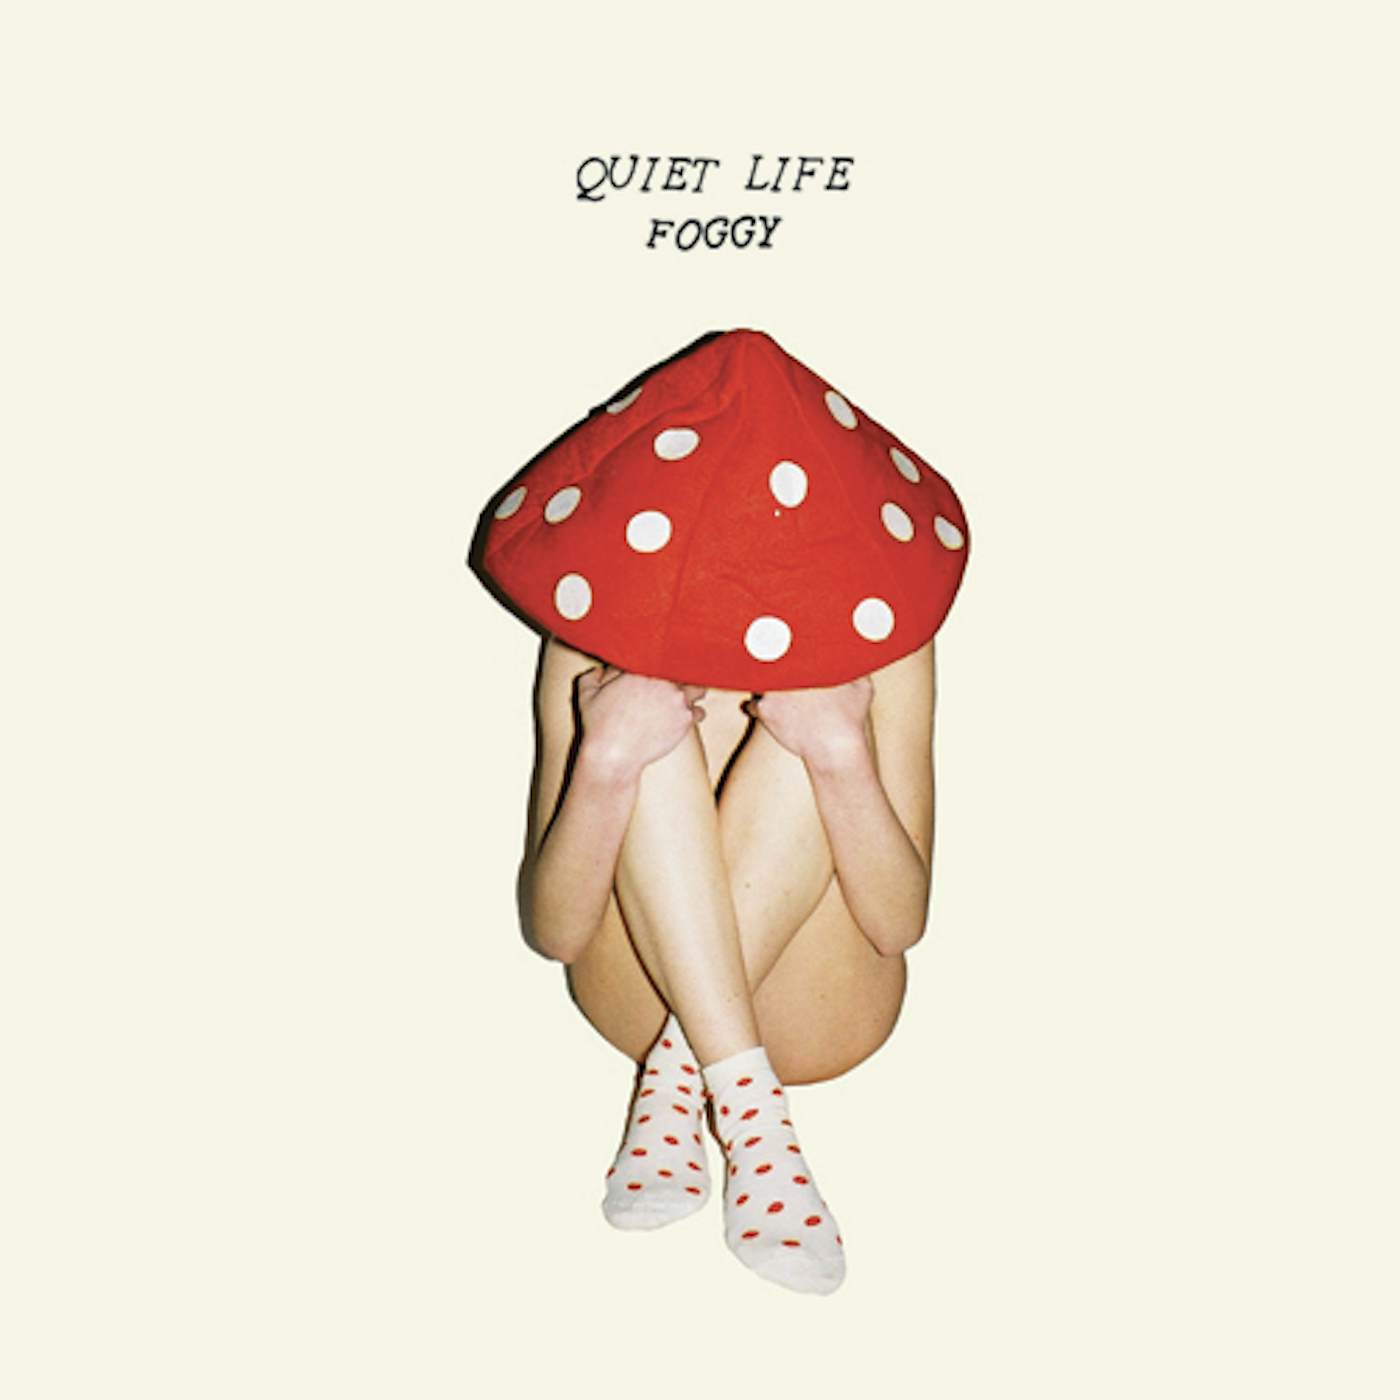 Quiet Life Foggy Vinyl Record